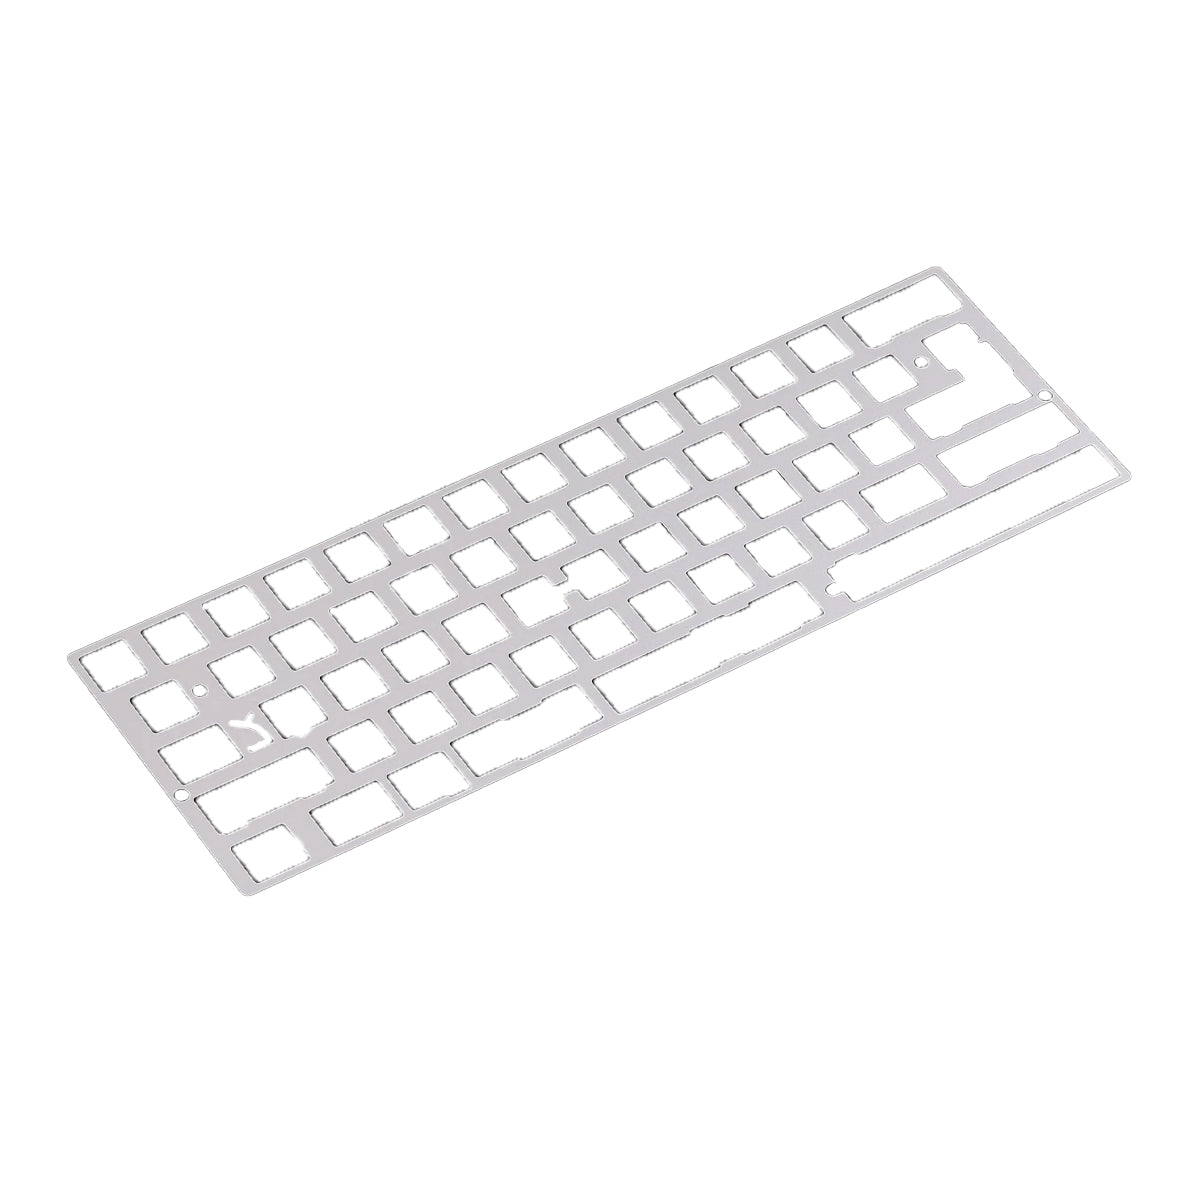 DZ60 CNC 60% Keyboard plate - Aluminum - Store 974 | ستور ٩٧٤